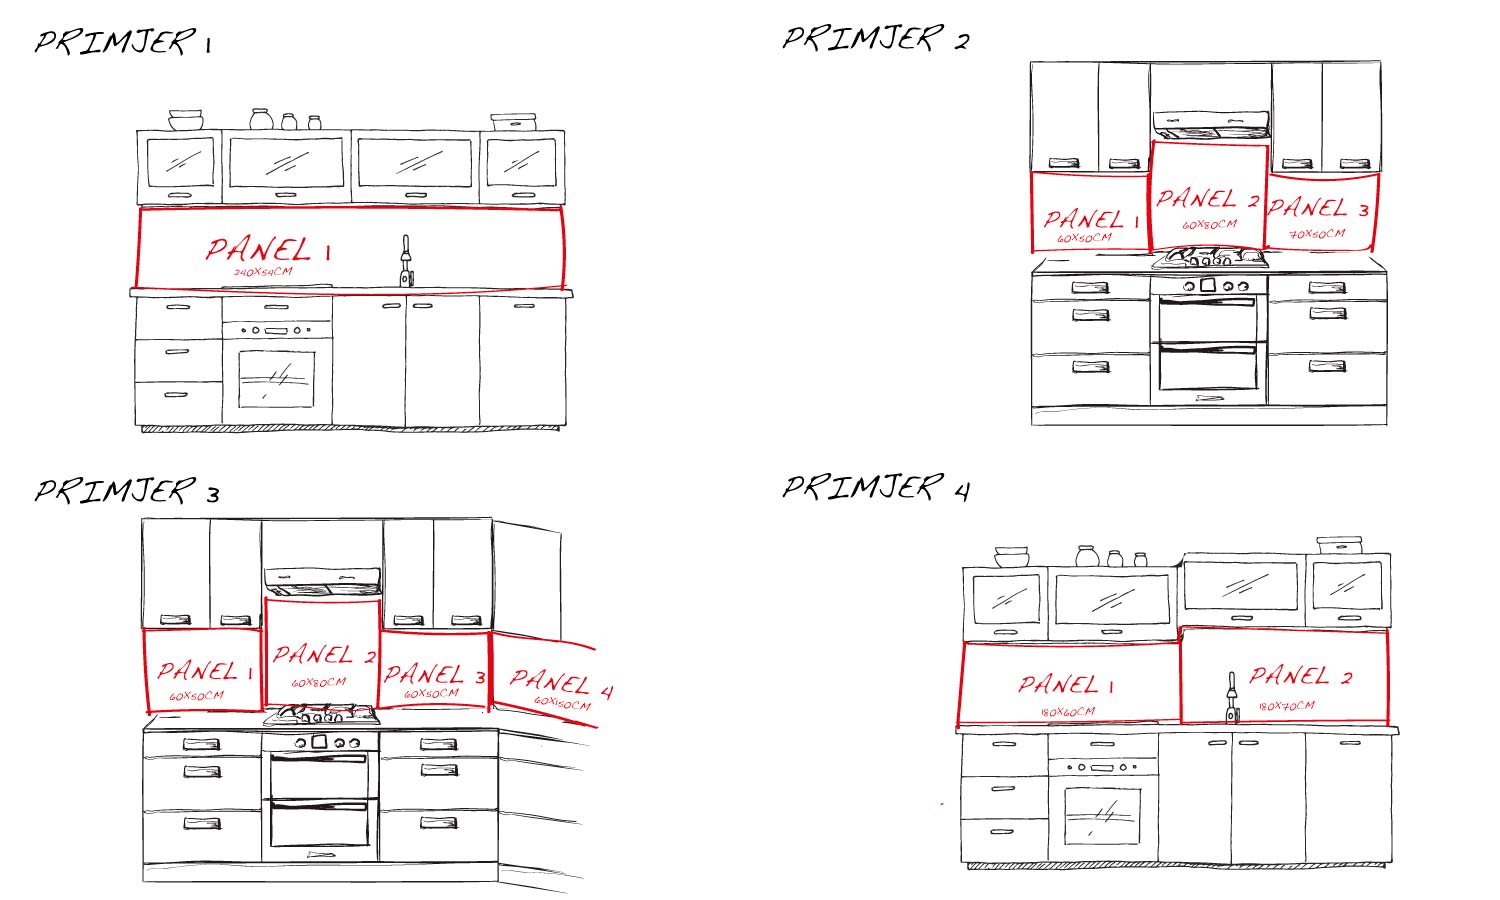 Kuhinjski paneli Seamless Wallpaper - Pleksi steklo - s tiskom za kuhinjo, Stenske obloge PKU0344